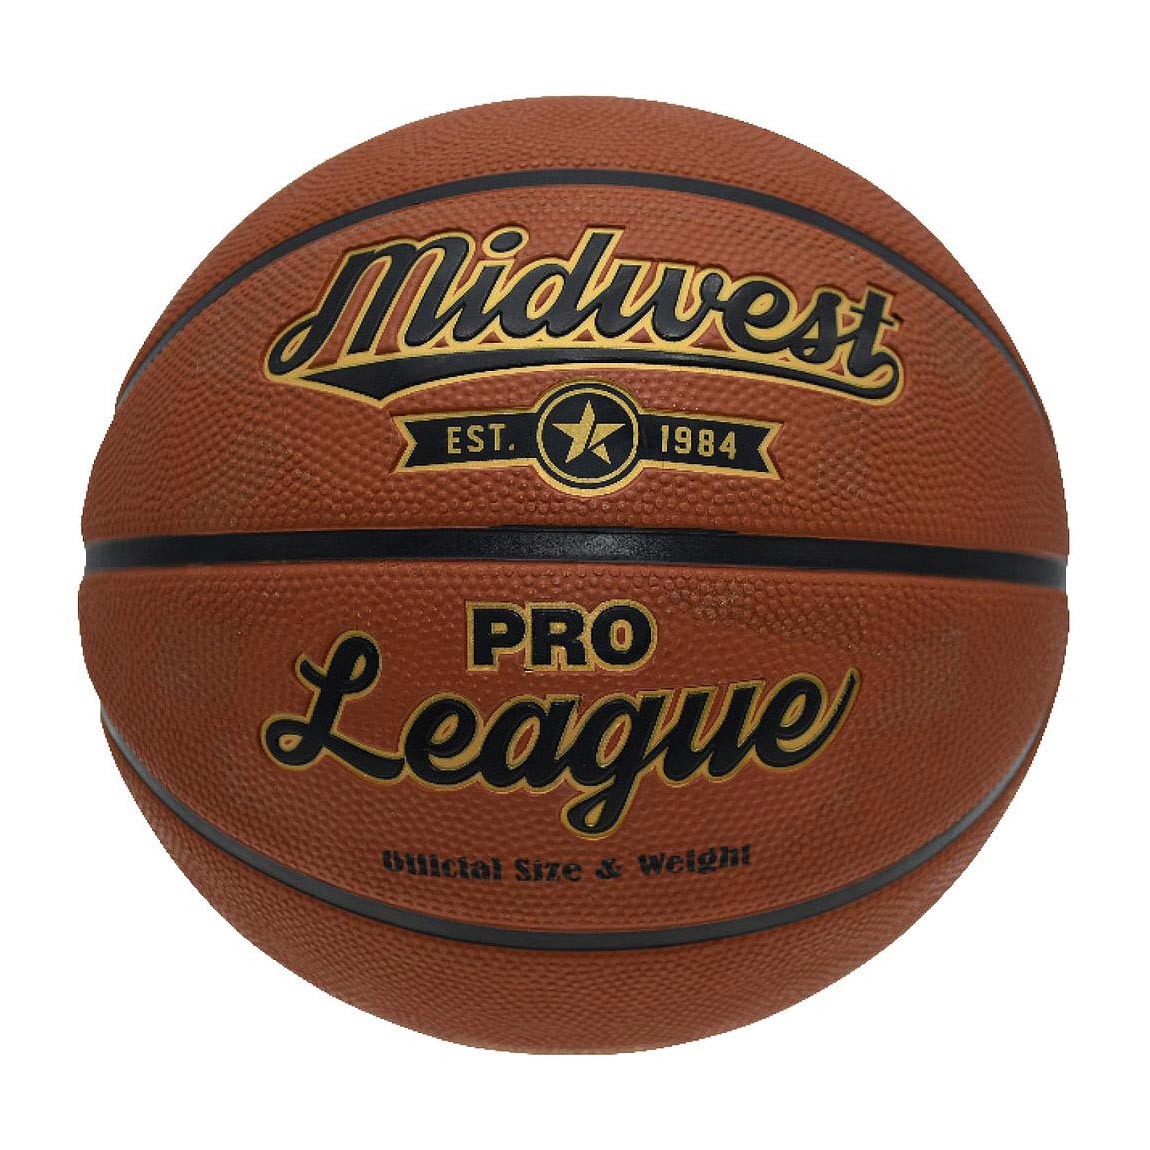 Midwest Pro League Basketball Size 5 Tan